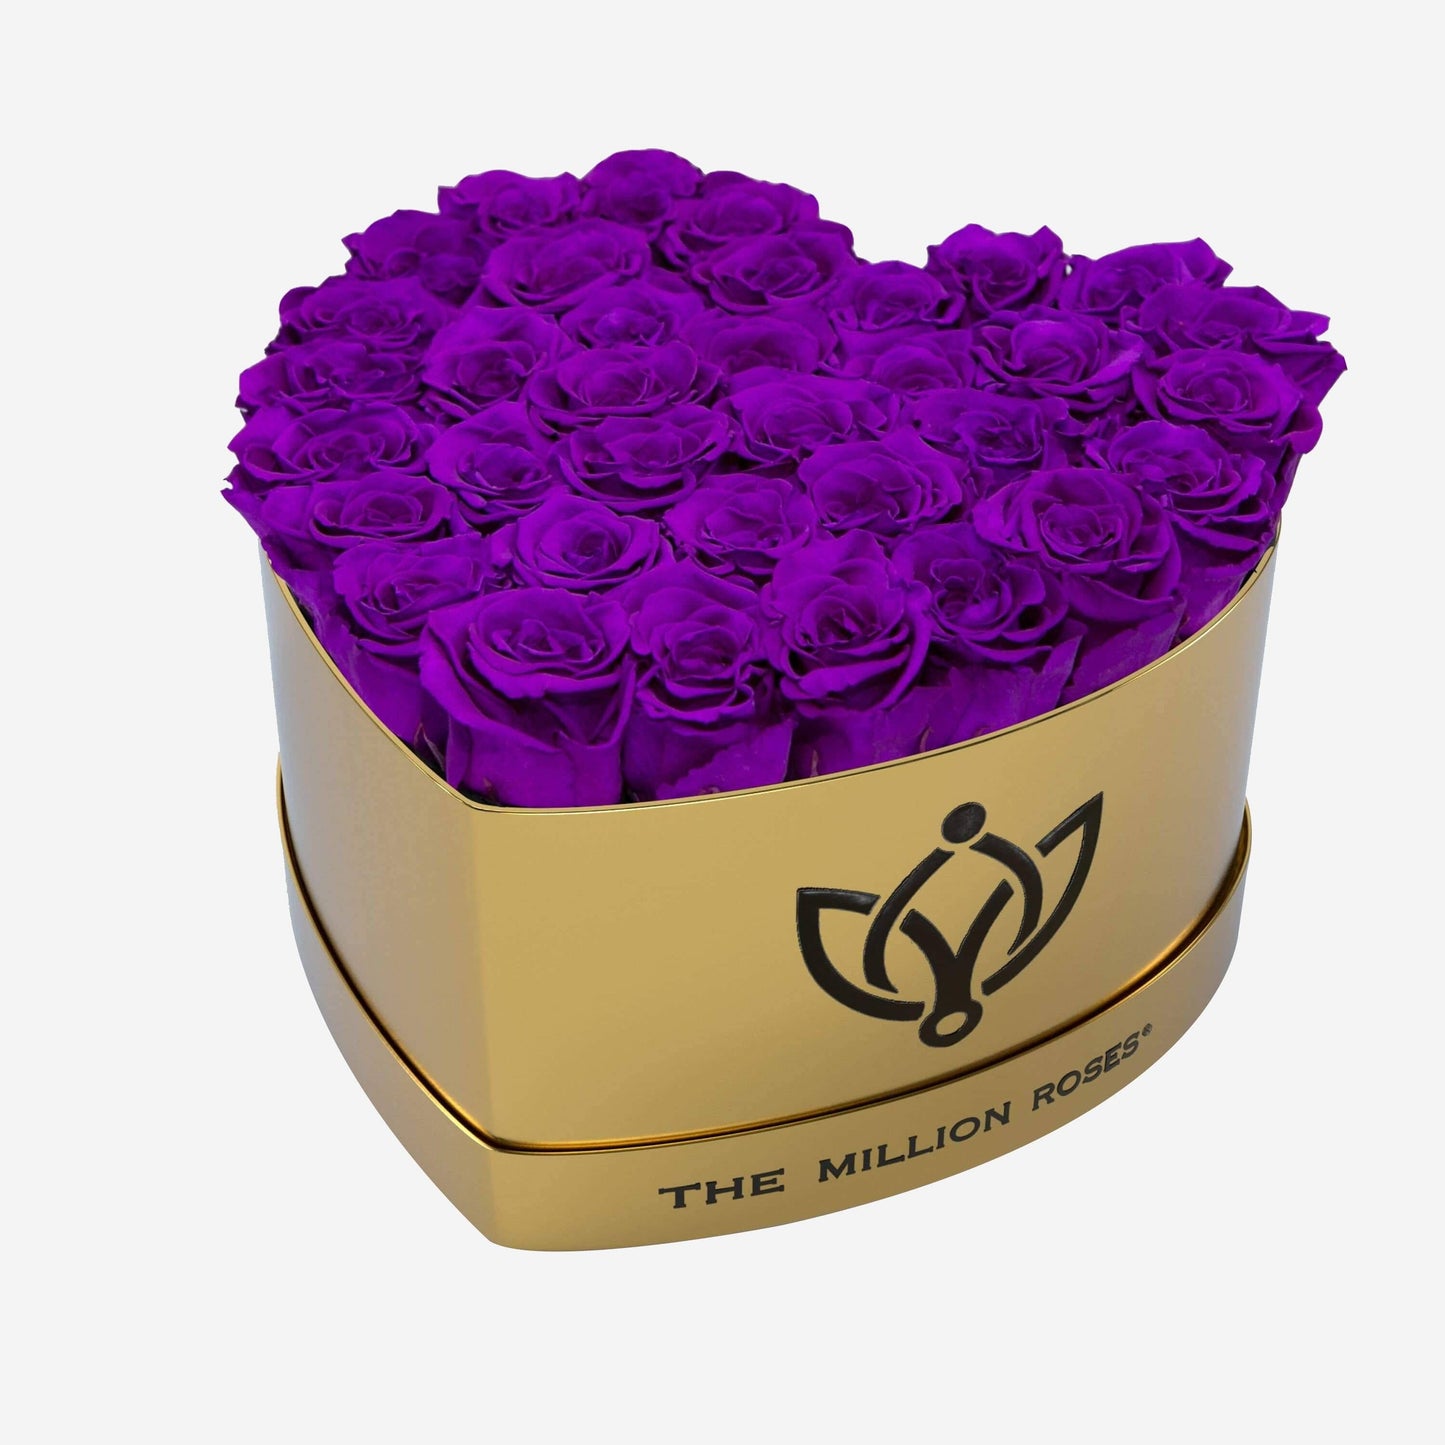 Heart Mirror Gold Box | Bright Purple Roses - The Million Roses